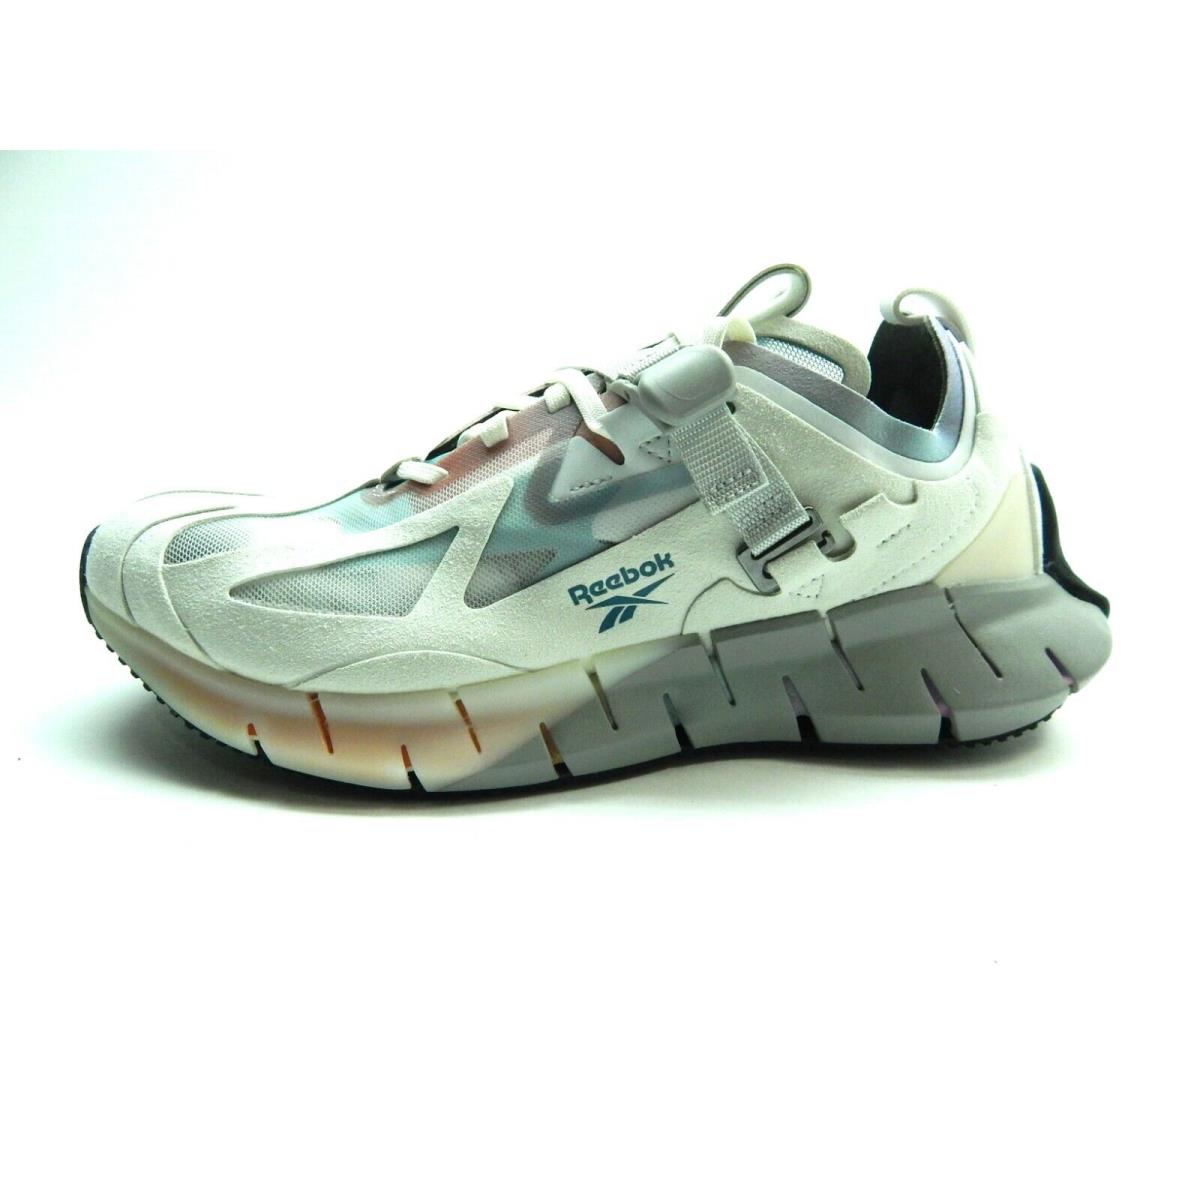 Reebok Zig Kinetica Sansto White Concept Type Running EG7477 Men Shoes Size 5.0